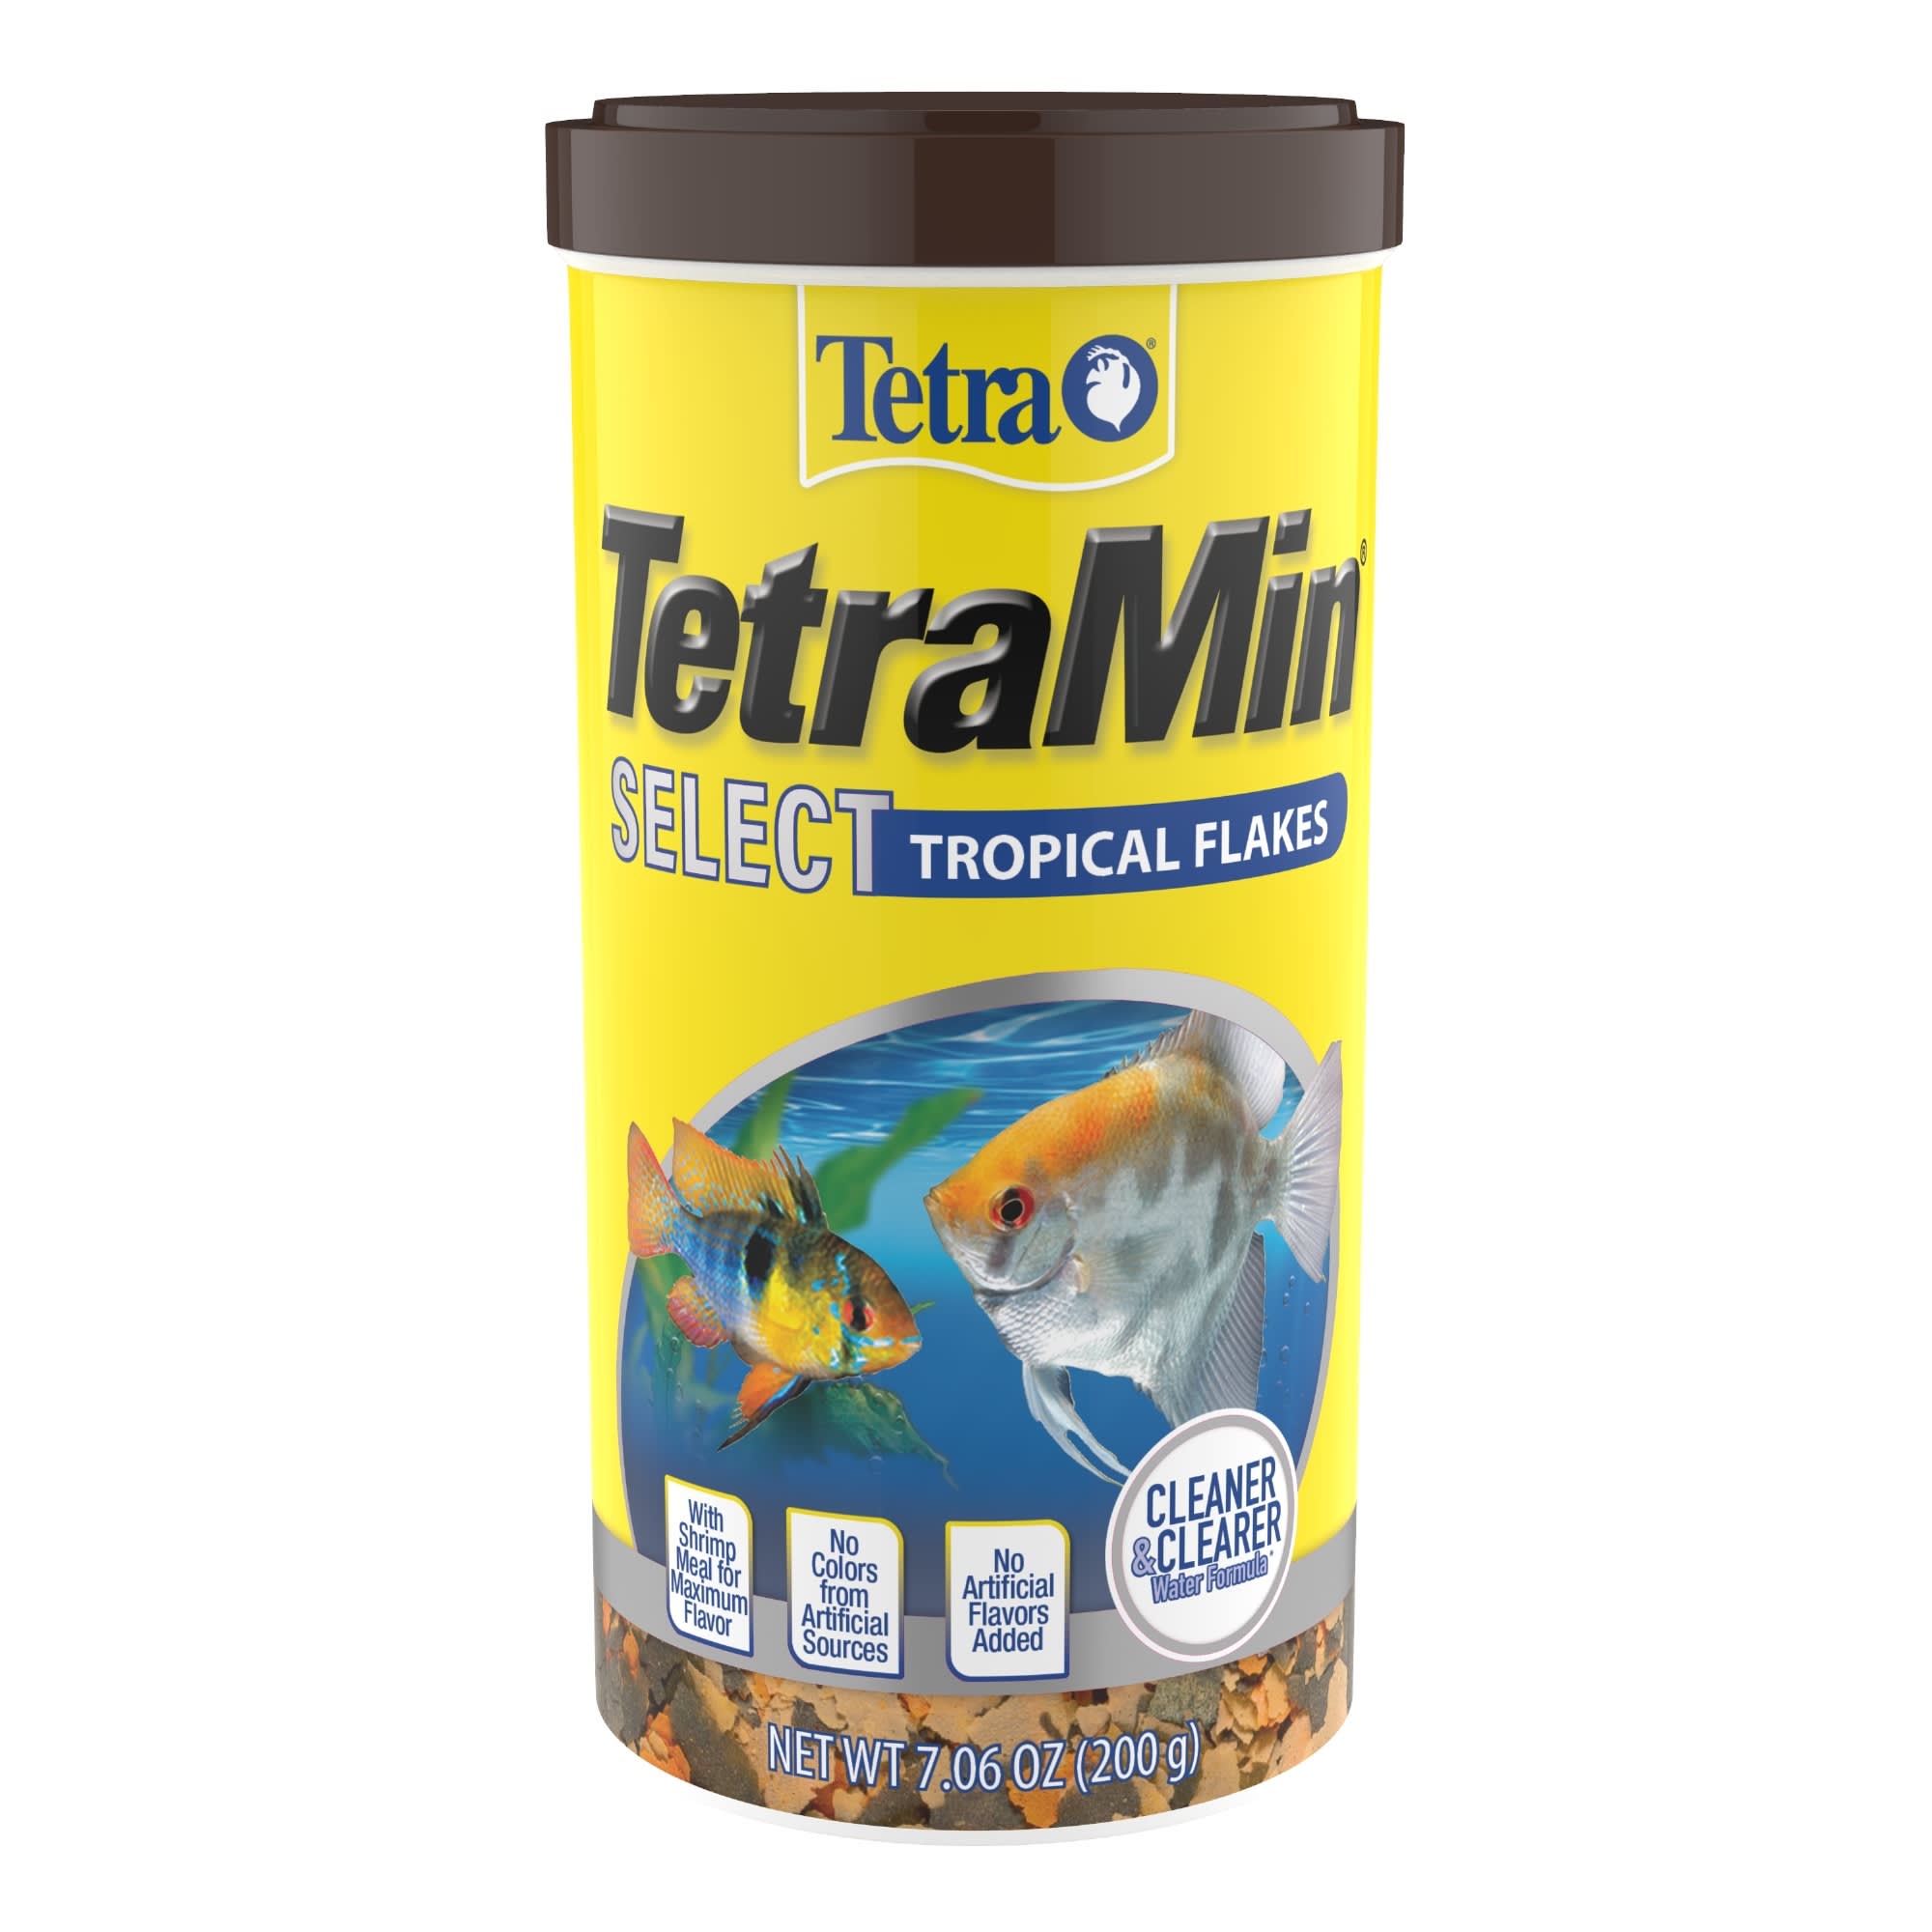 Tetra Genuine Tetramin Tropical Fish Food Flakes